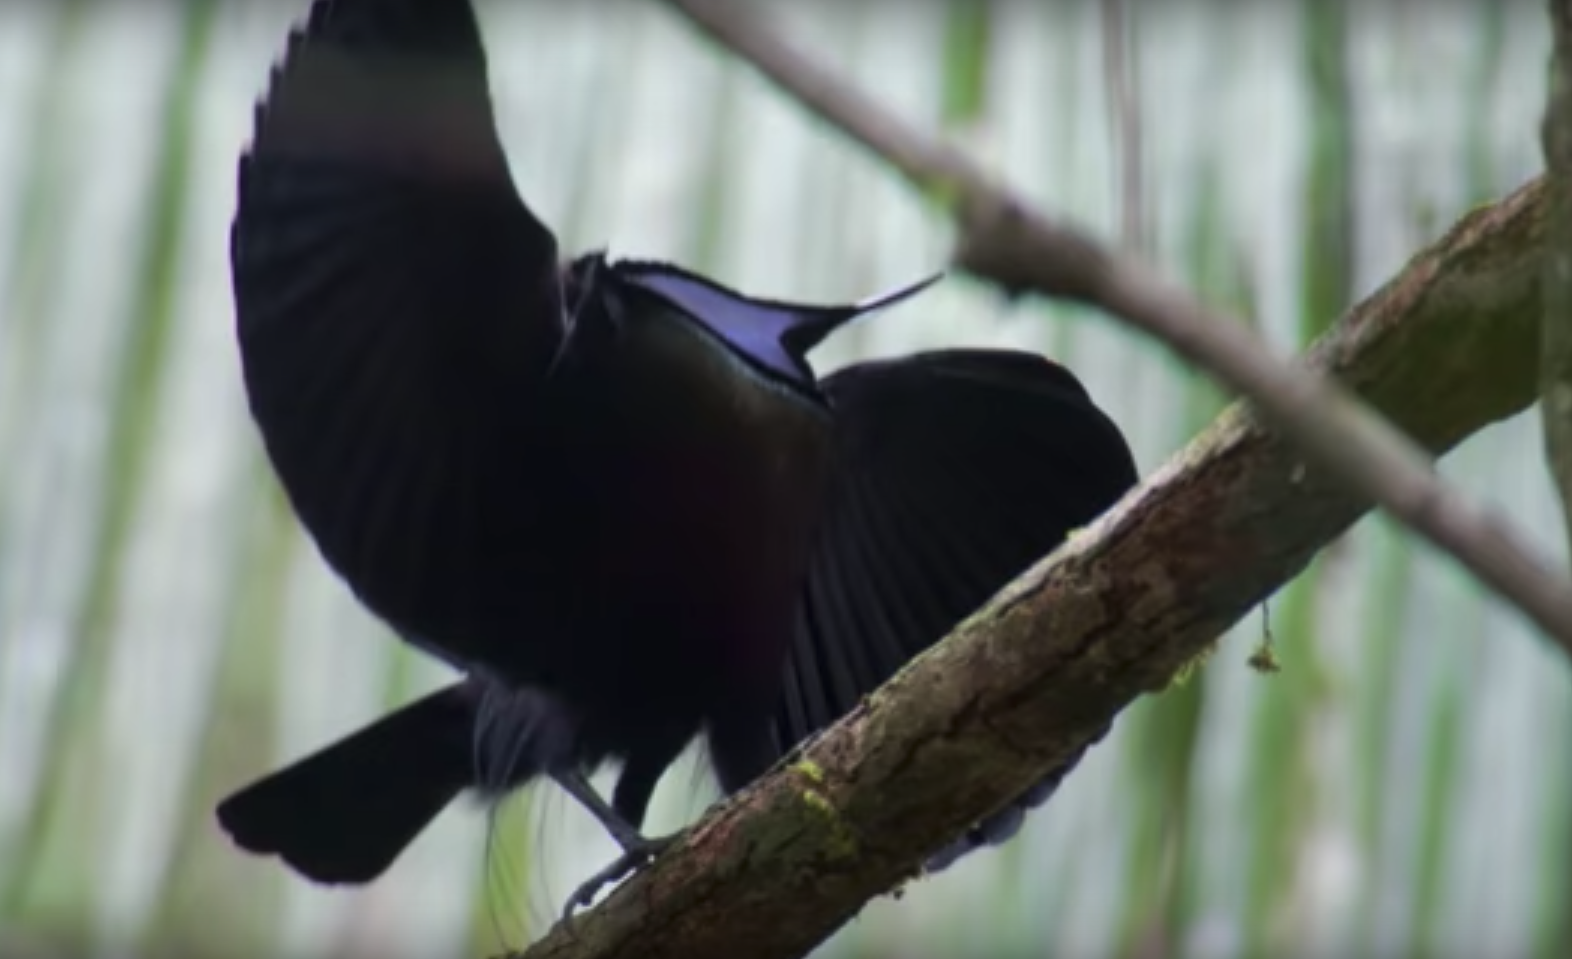 Scientists Shine New Light on the Blackest Black Feathers, Smart News